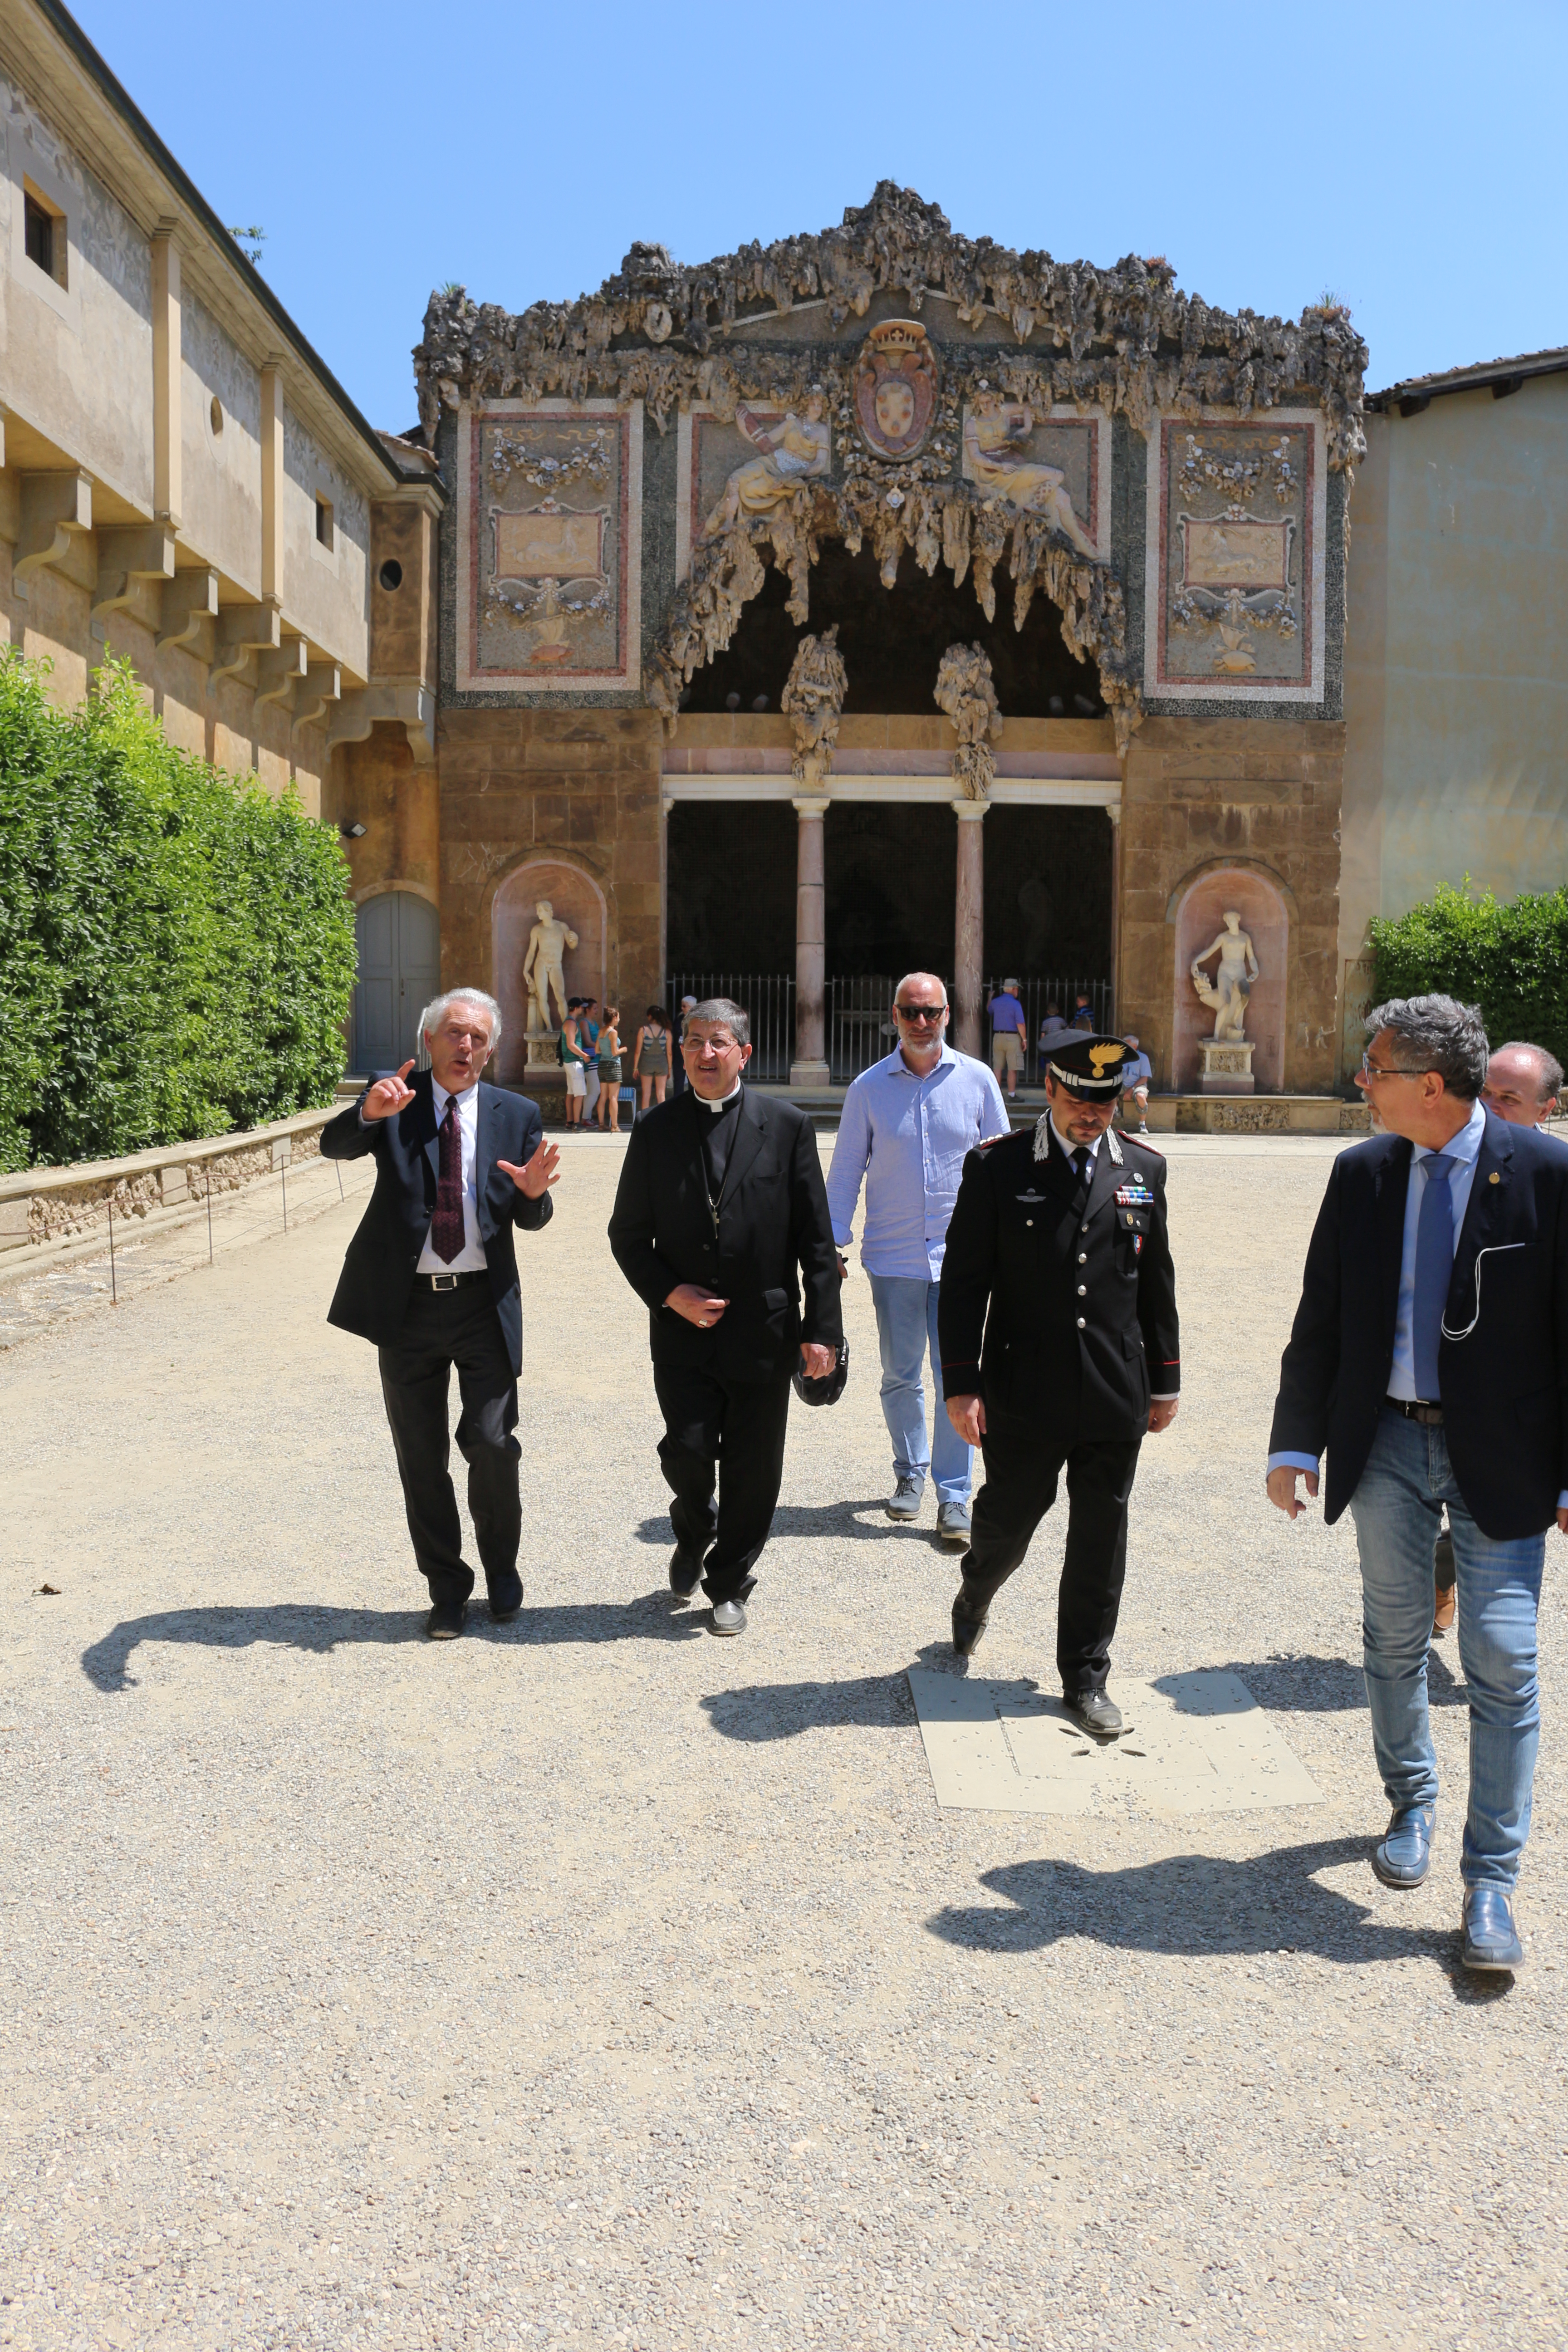 Visita pastorale cardinale Betori a Boboli (2)